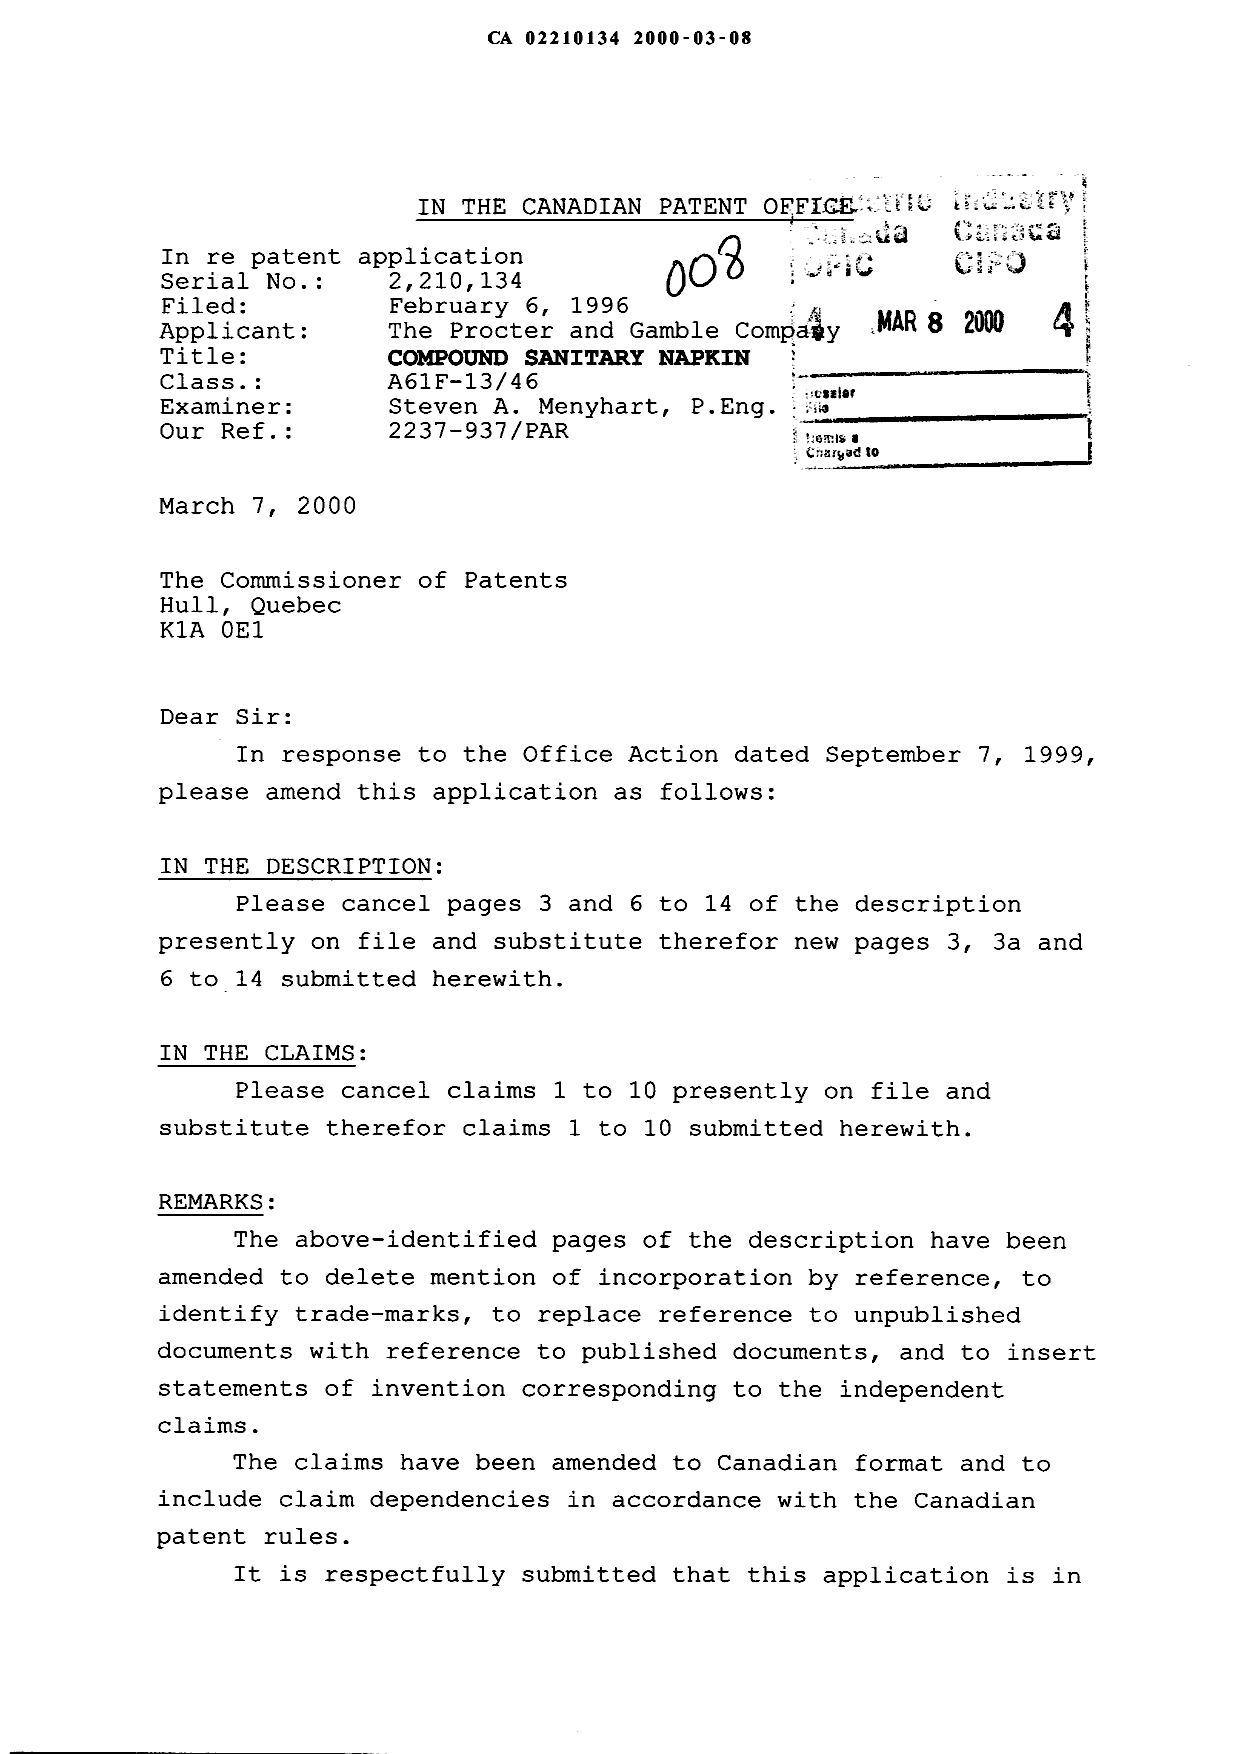 Canadian Patent Document 2210134. Prosecution-Amendment 20000308. Image 1 of 15